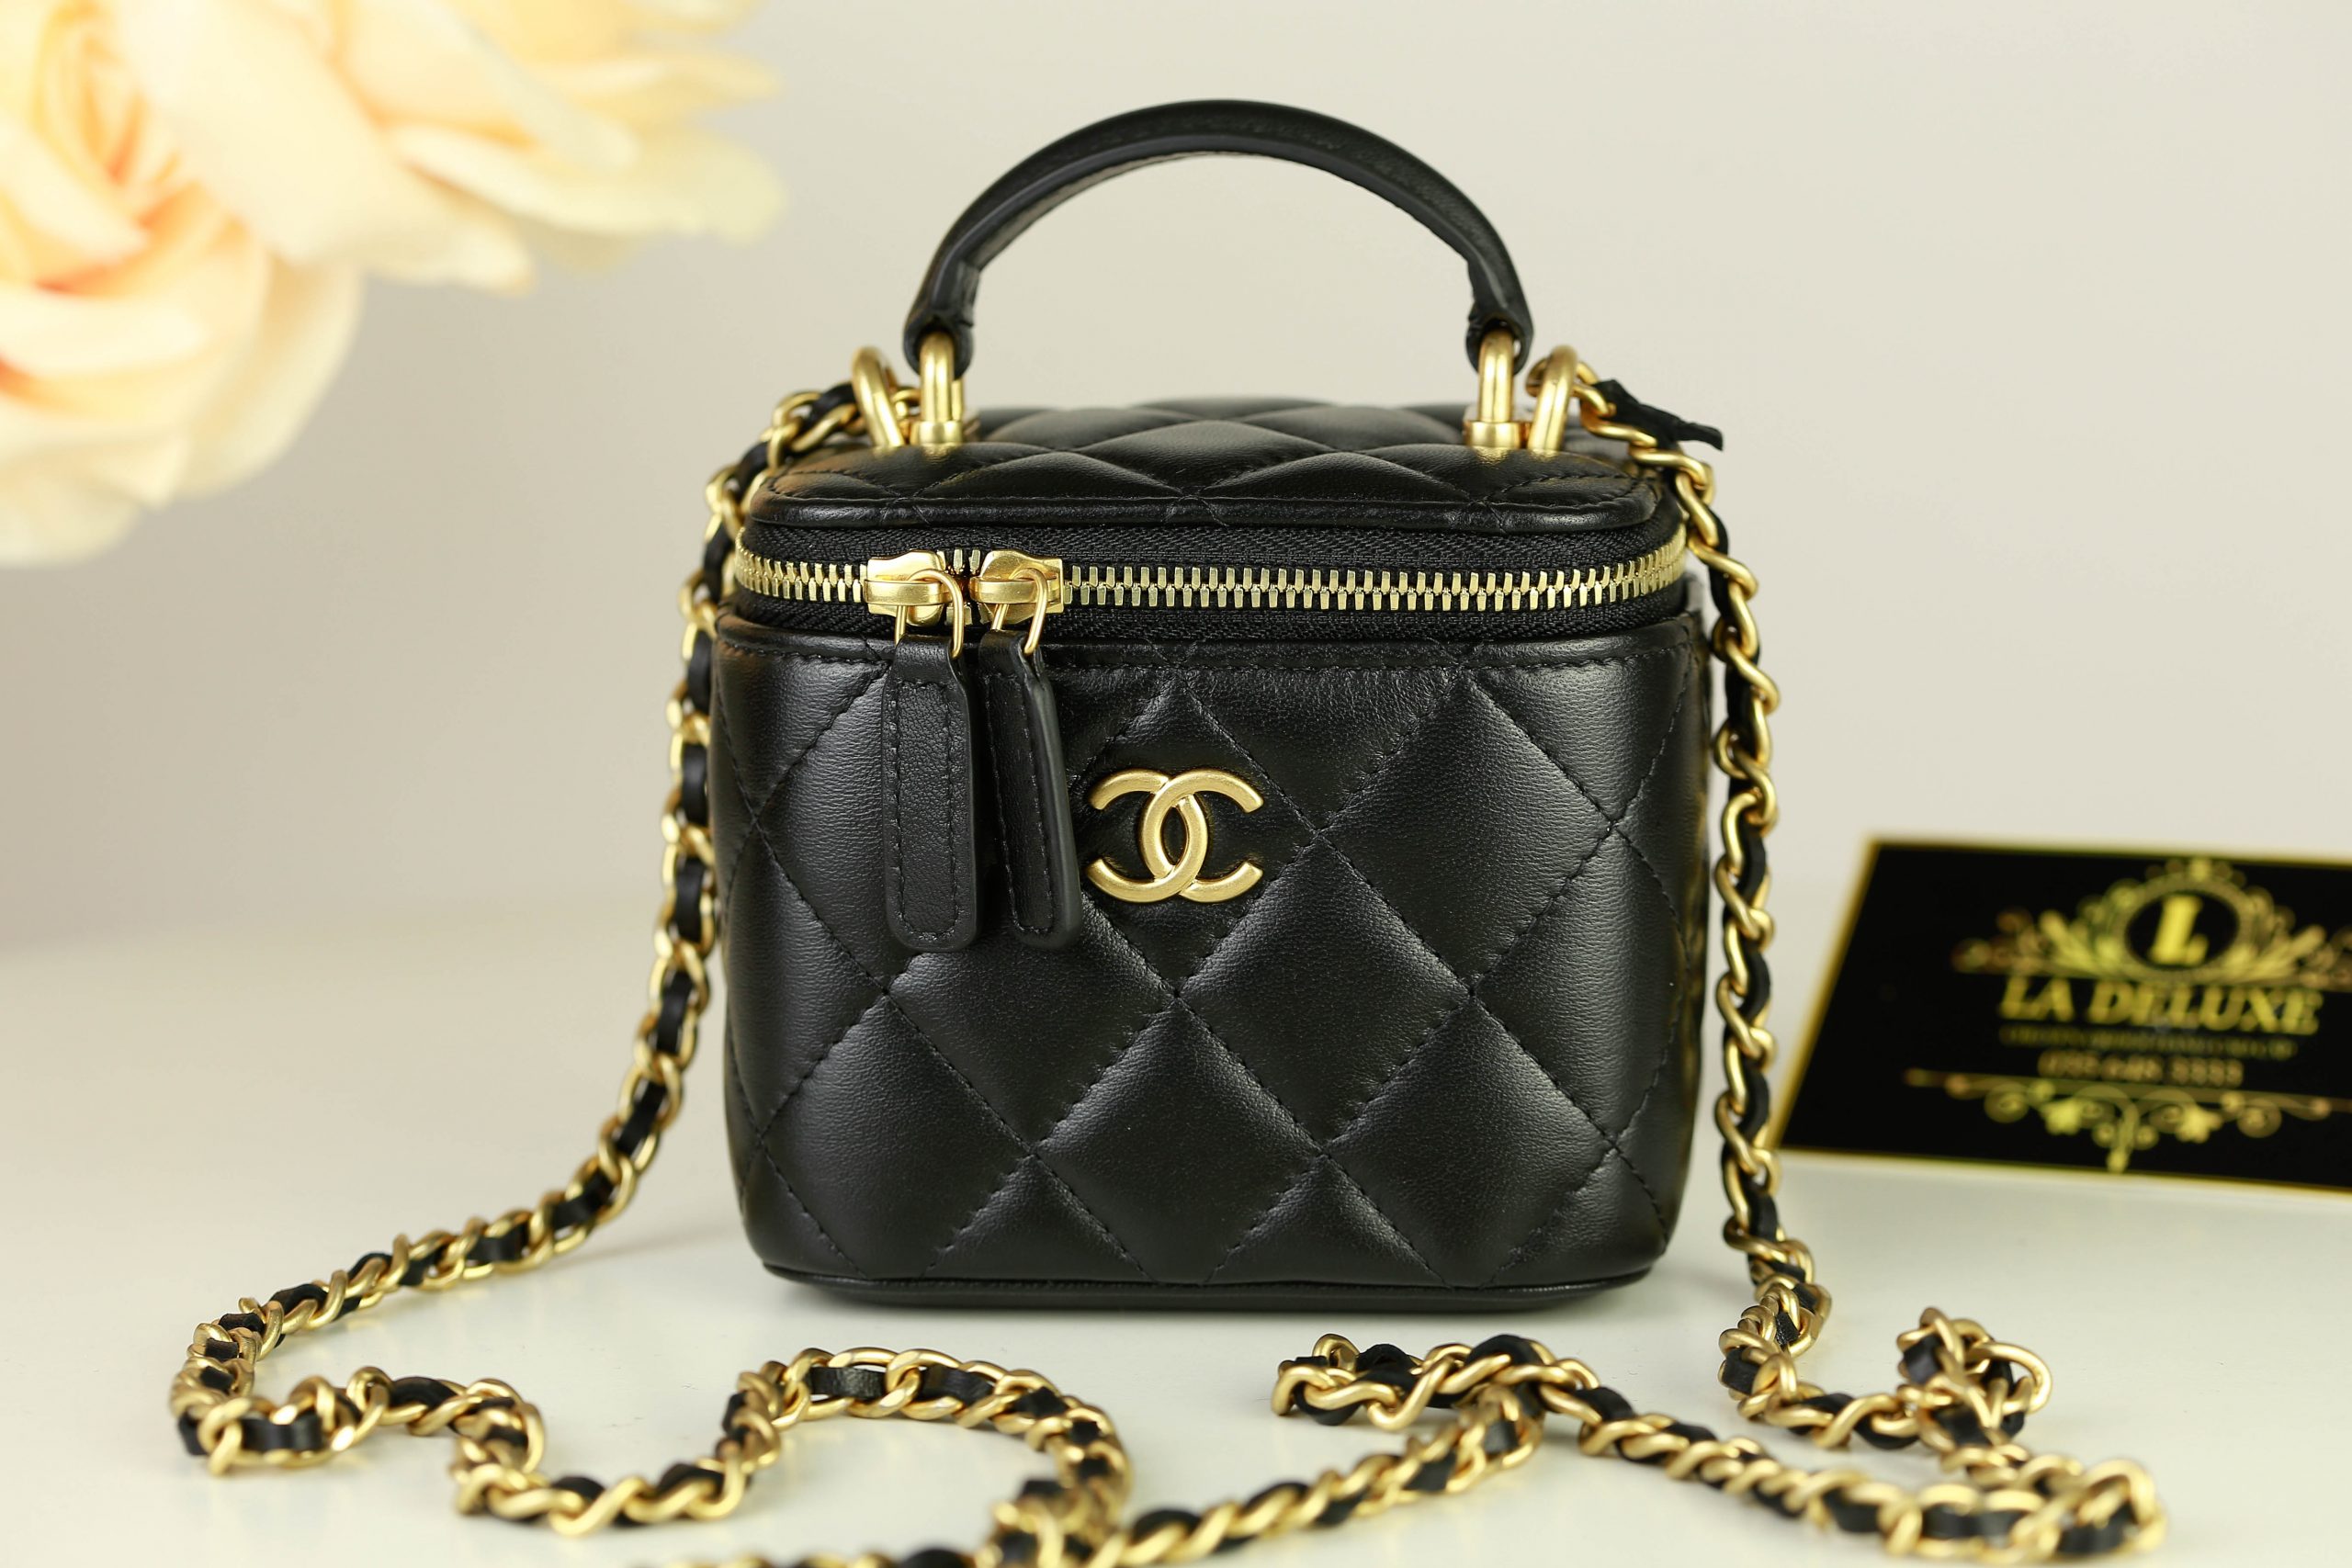 Chanel Small Vanity Bag With Strap - Đen - La Deluxe